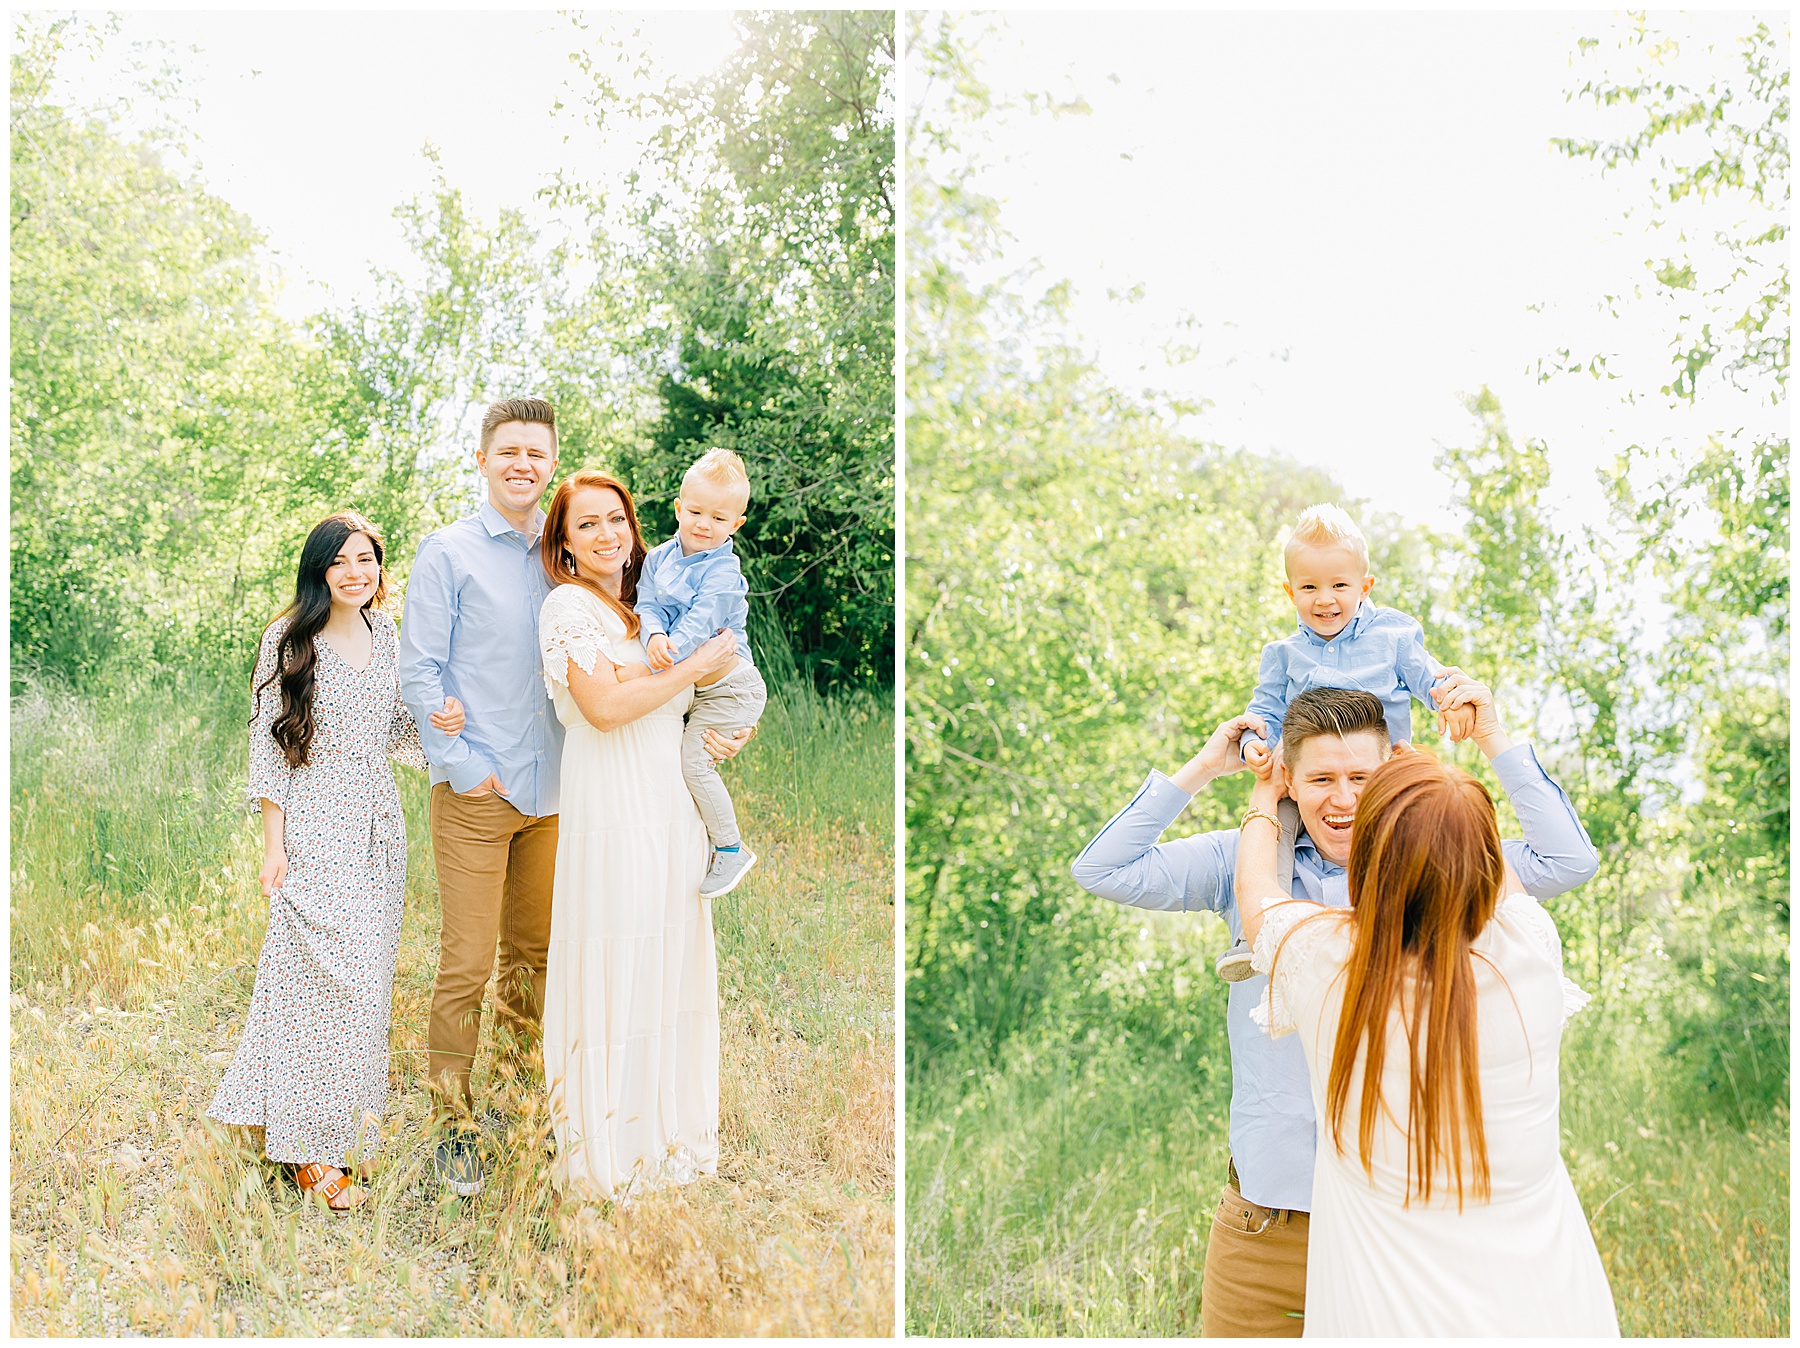 Rutkoski | Riverton Family PhotographerRutkoski | Riverton Family Photographer